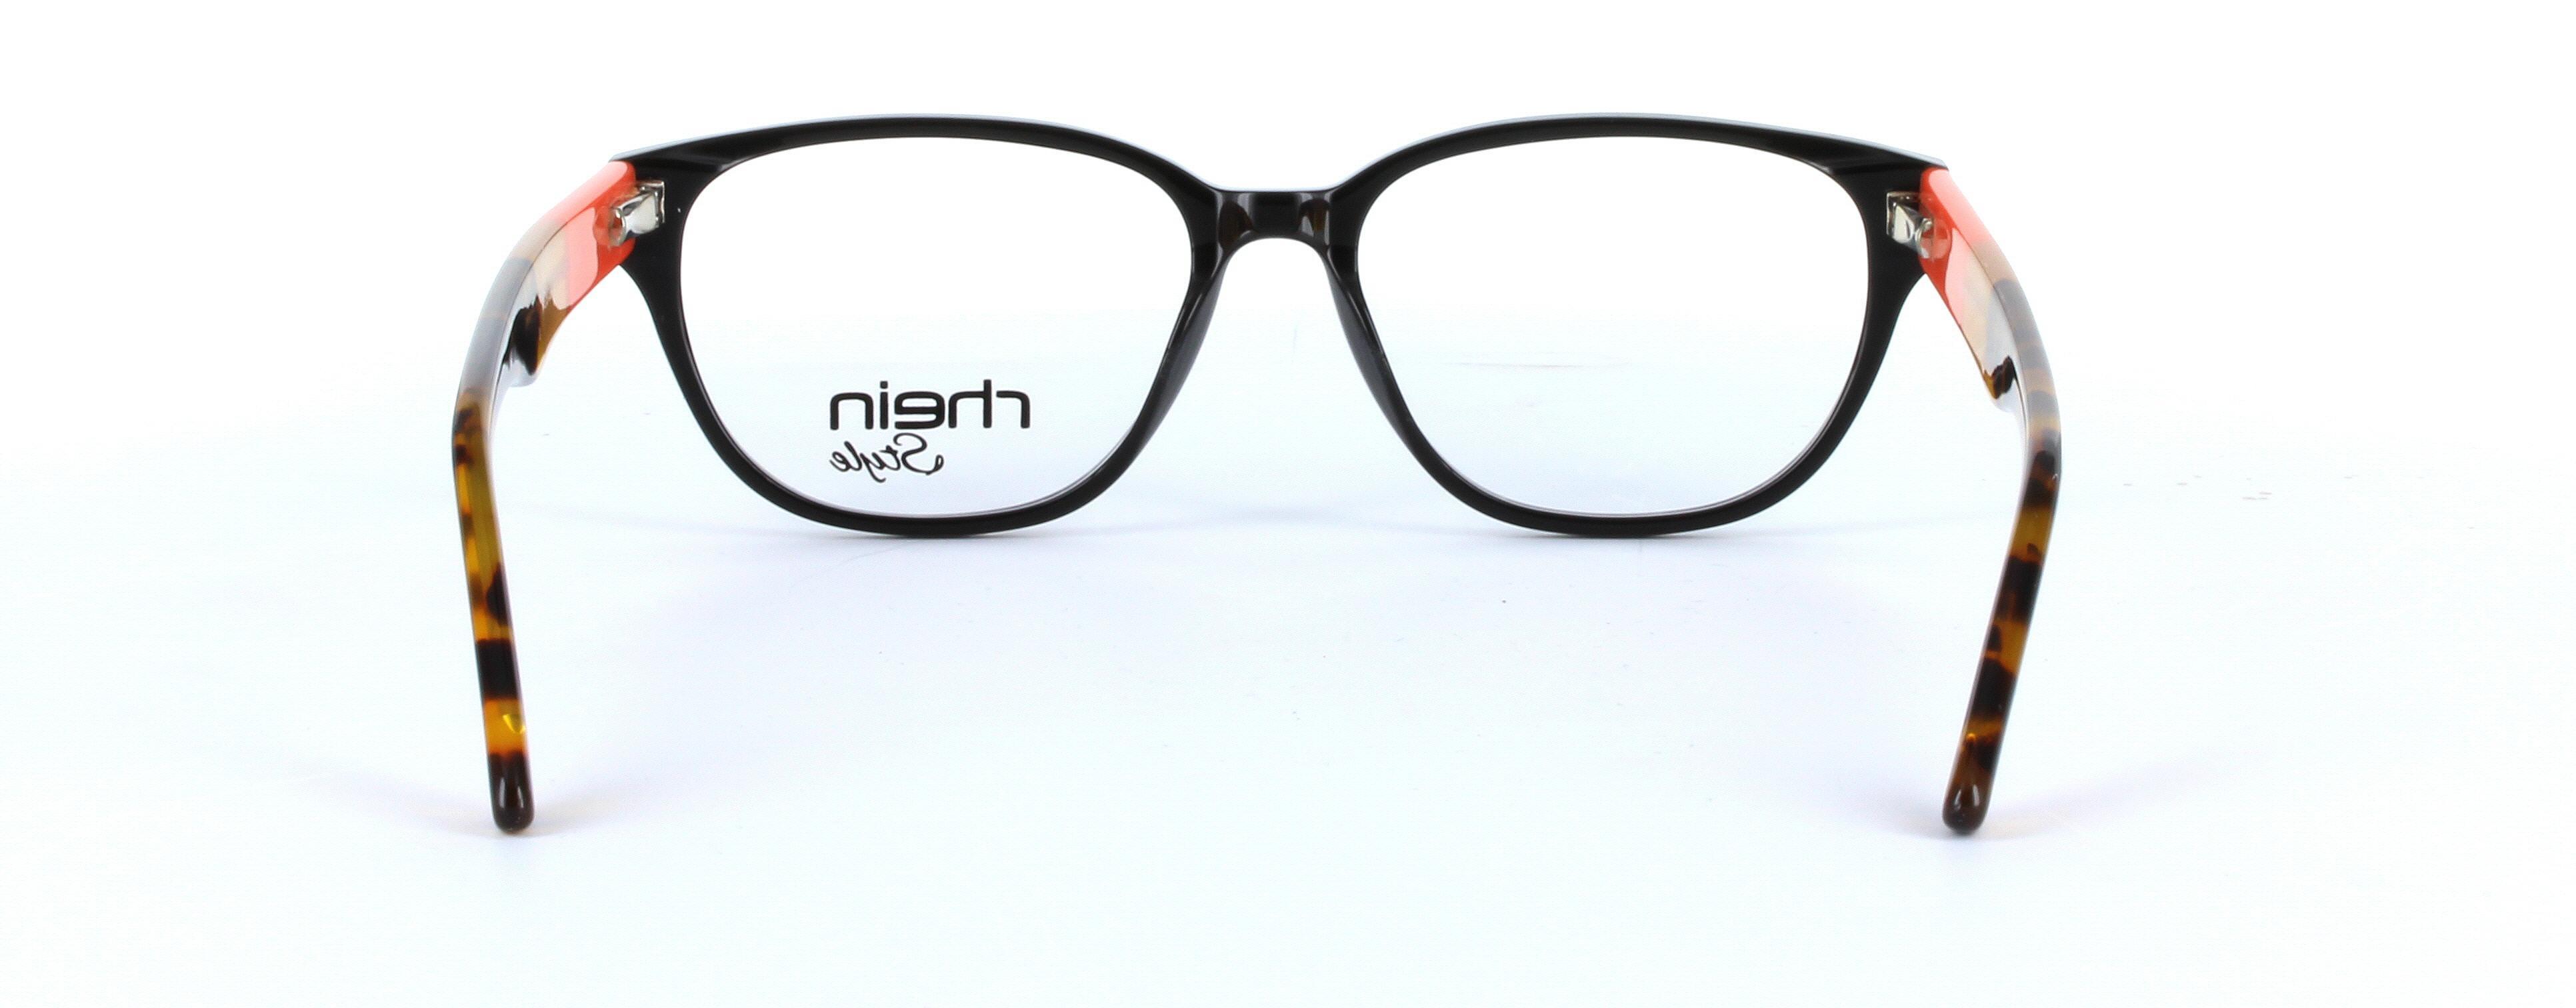 Felicia Black Full Rim Oval Round Plastic Glasses - Image View 3